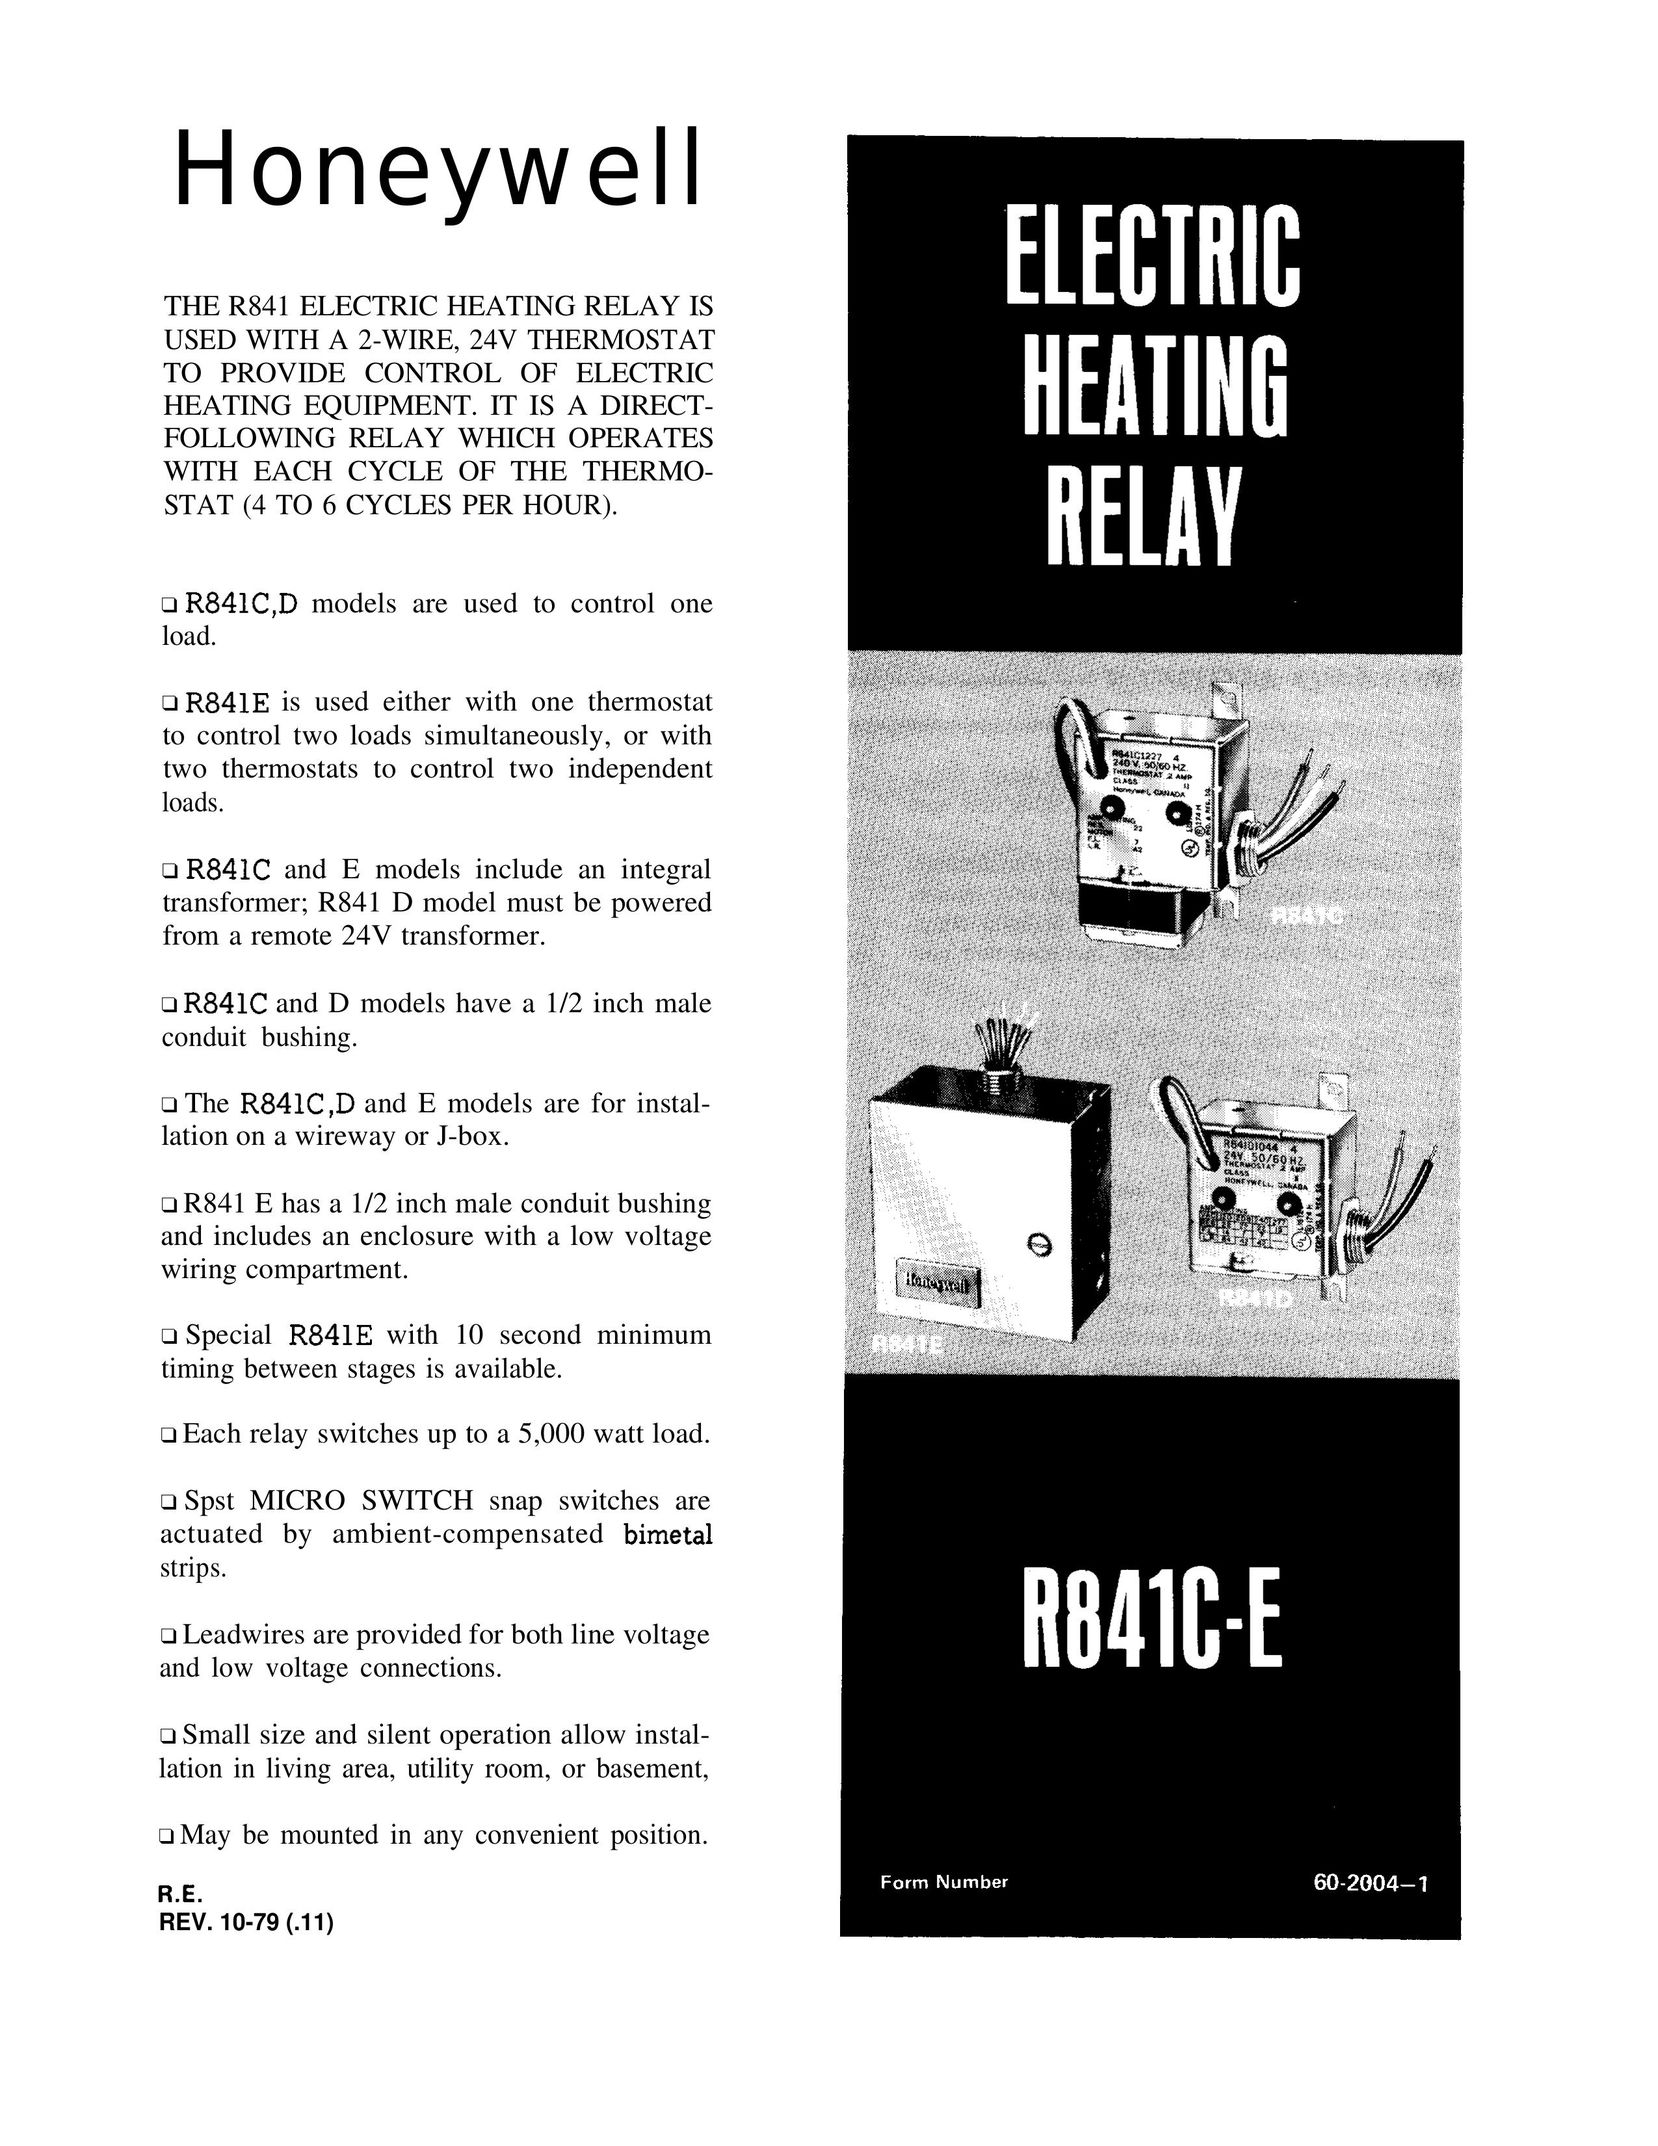 Honeywell R841C-E Heating System User Manual